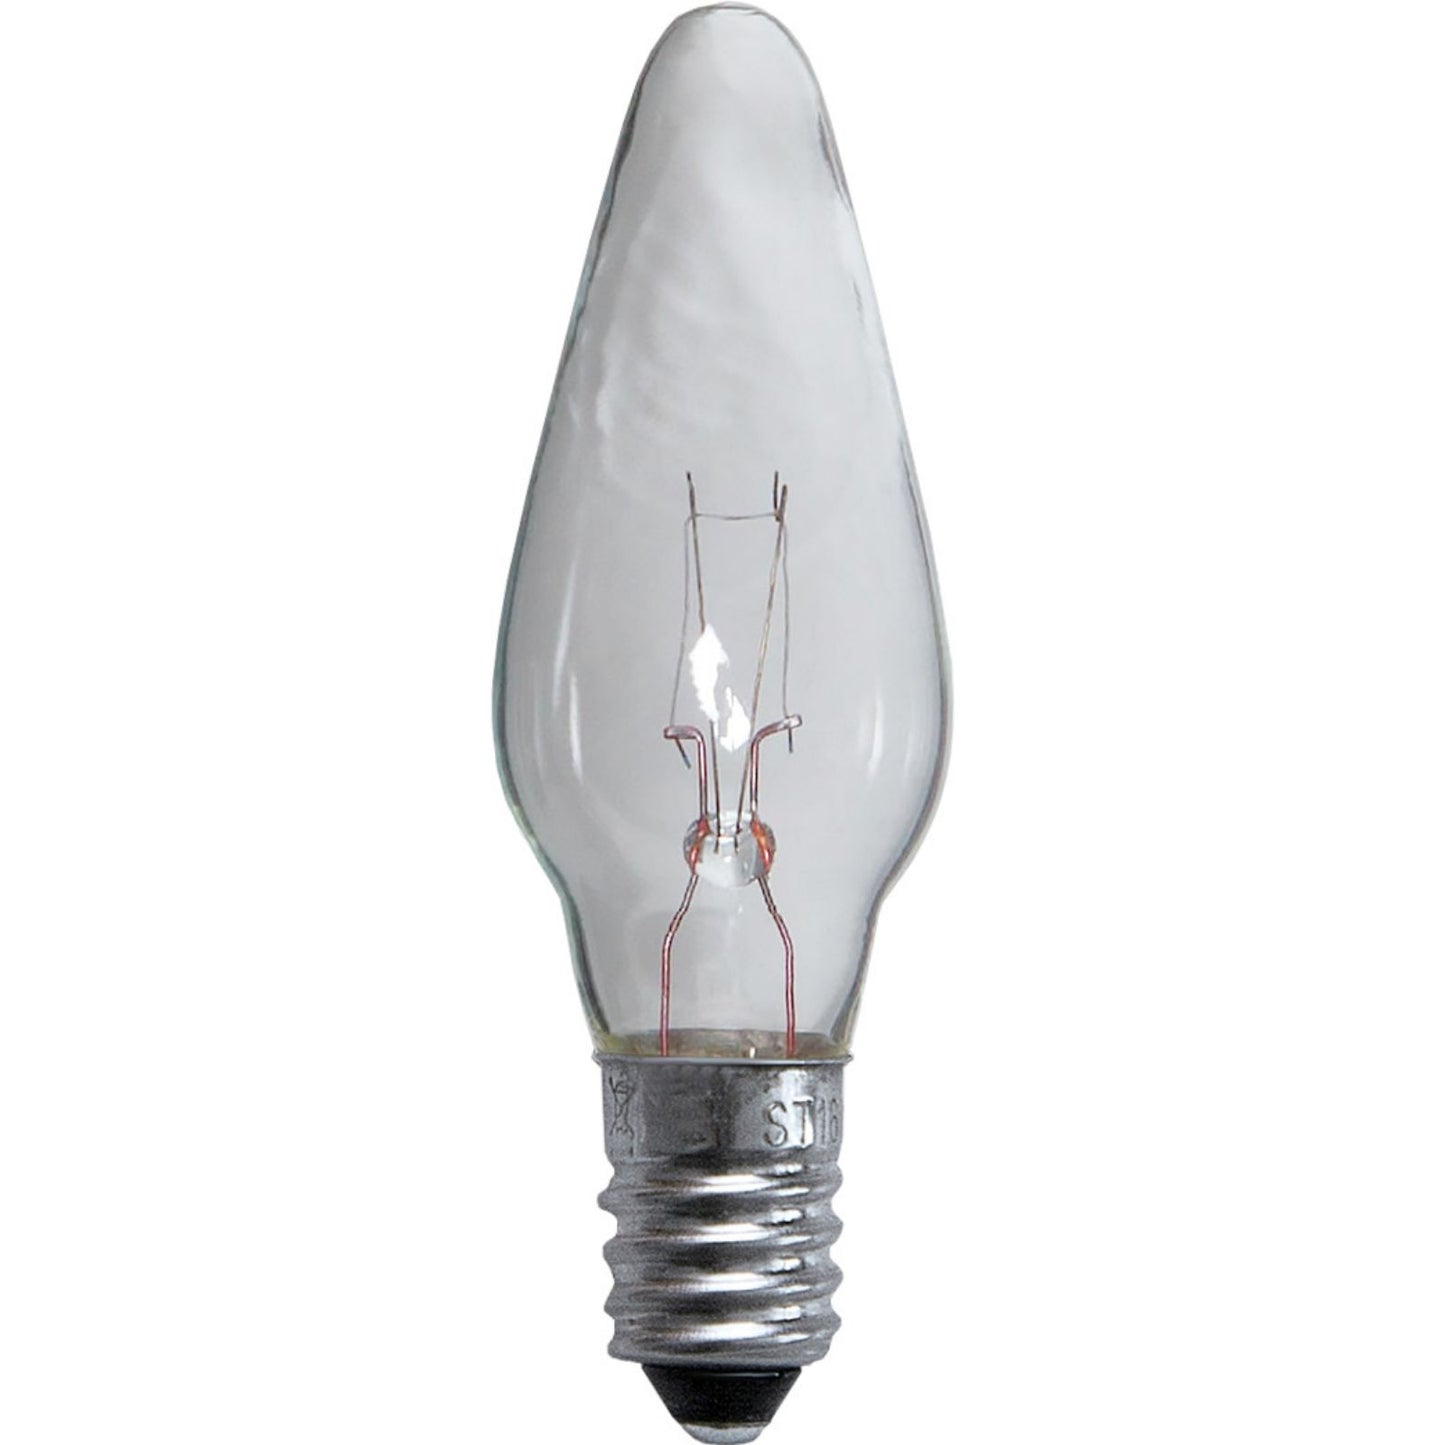 reservlampa-3-pack-spare-bulb-304-01